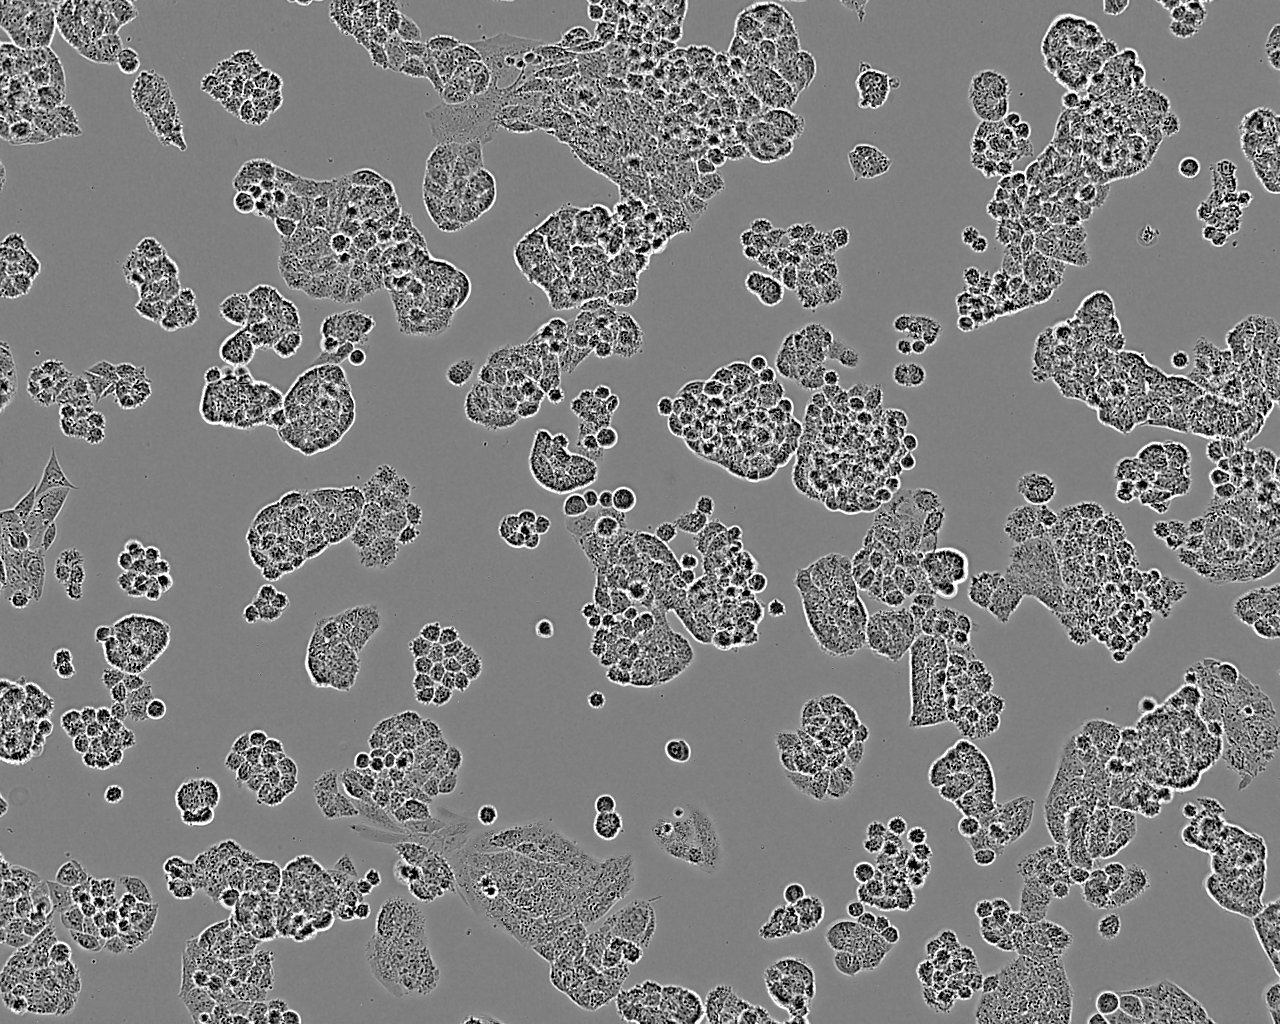 UPCI-SCC-090 epithelioid cells人口腔鳞癌细胞系,UPCI-SCC-090 epithelioid cells